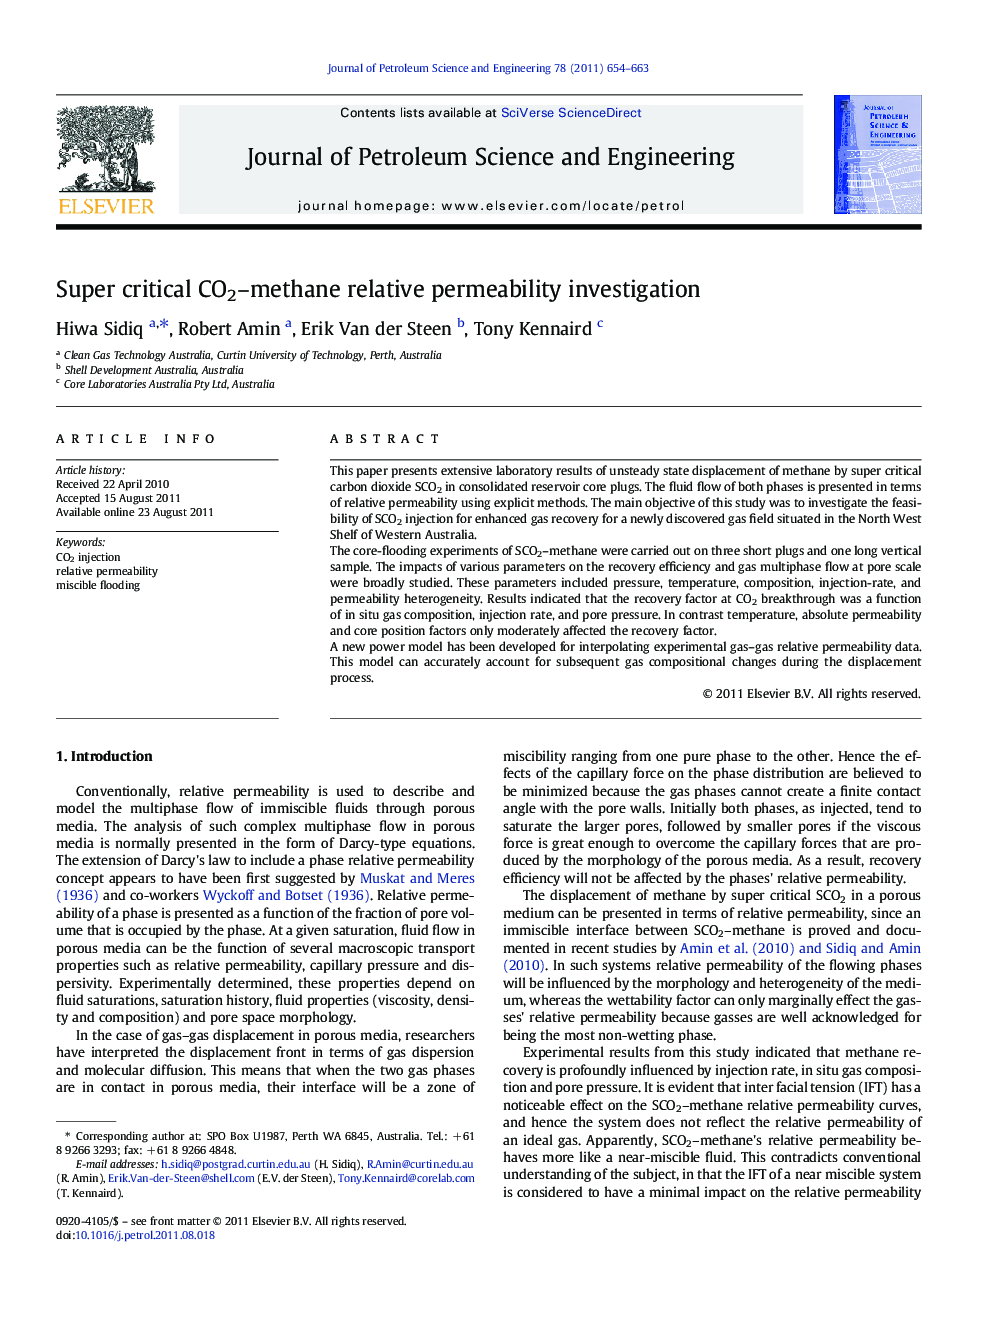 Super critical CO2-methane relative permeability investigation